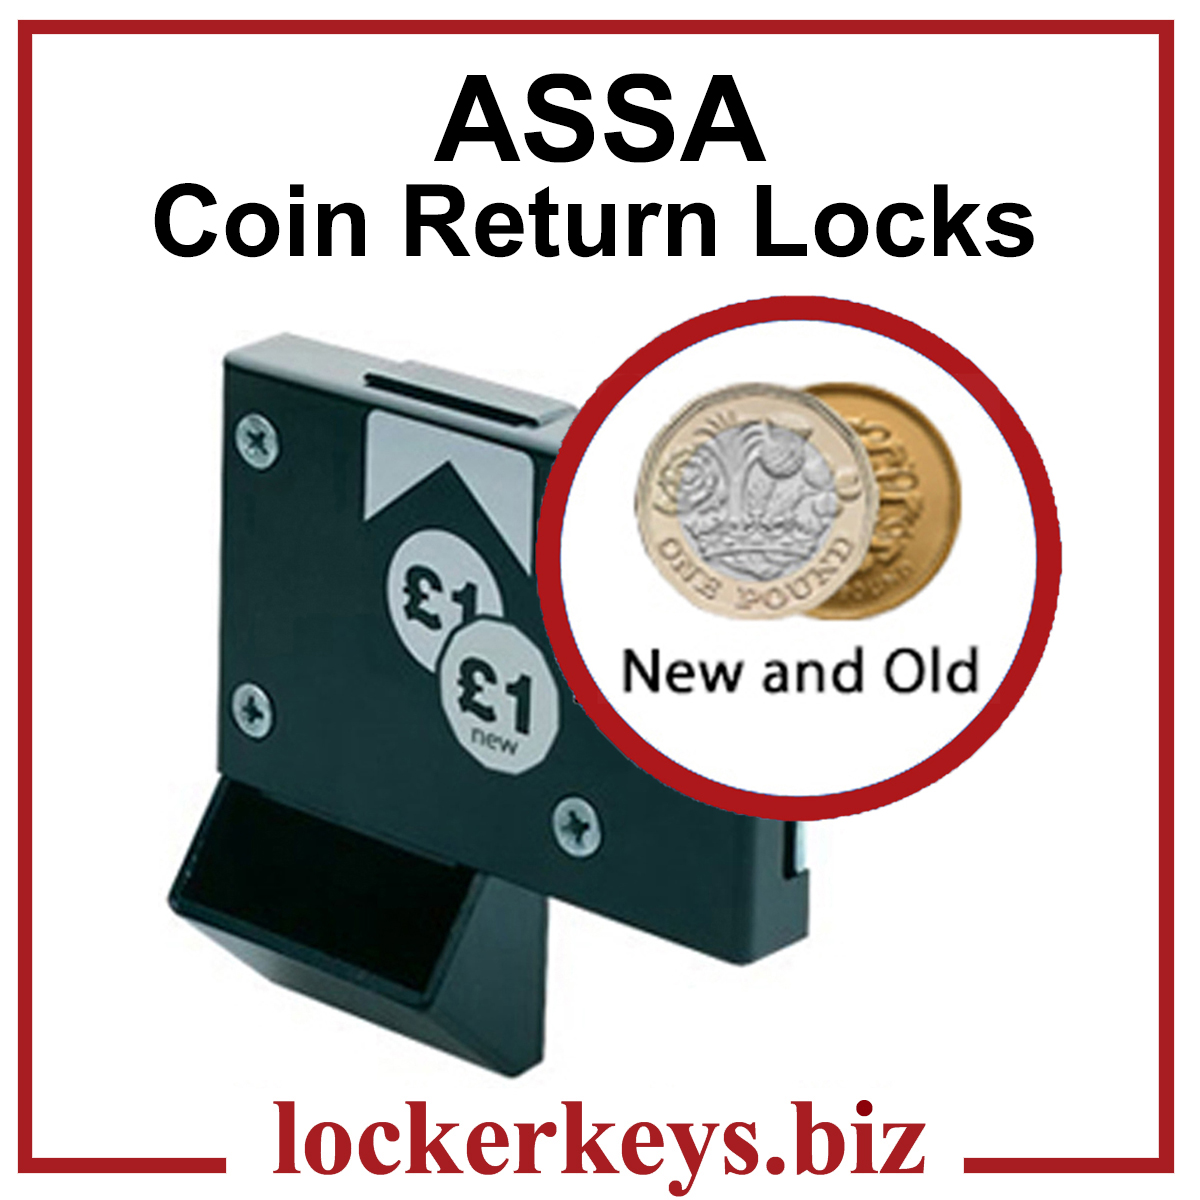 ASSA Locker Locks and Coin Return Locks